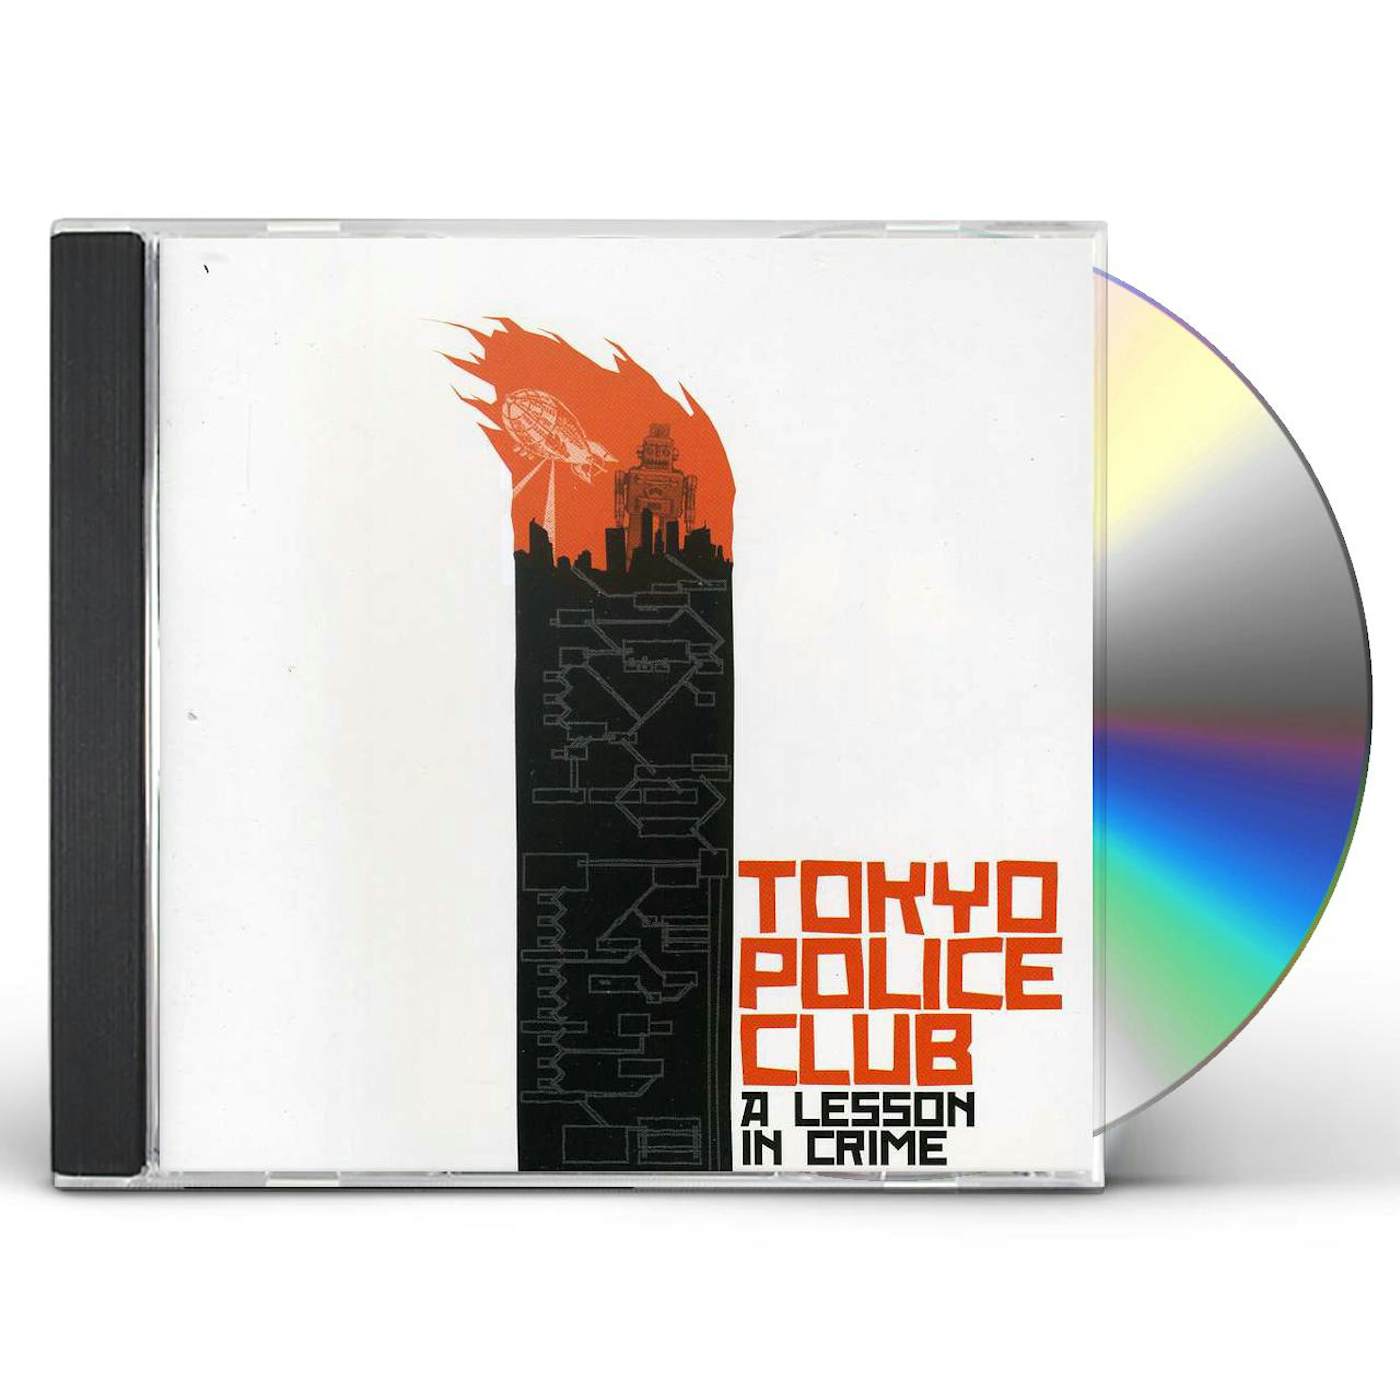 Tokyo Police Club LESSON IN CRIME CD